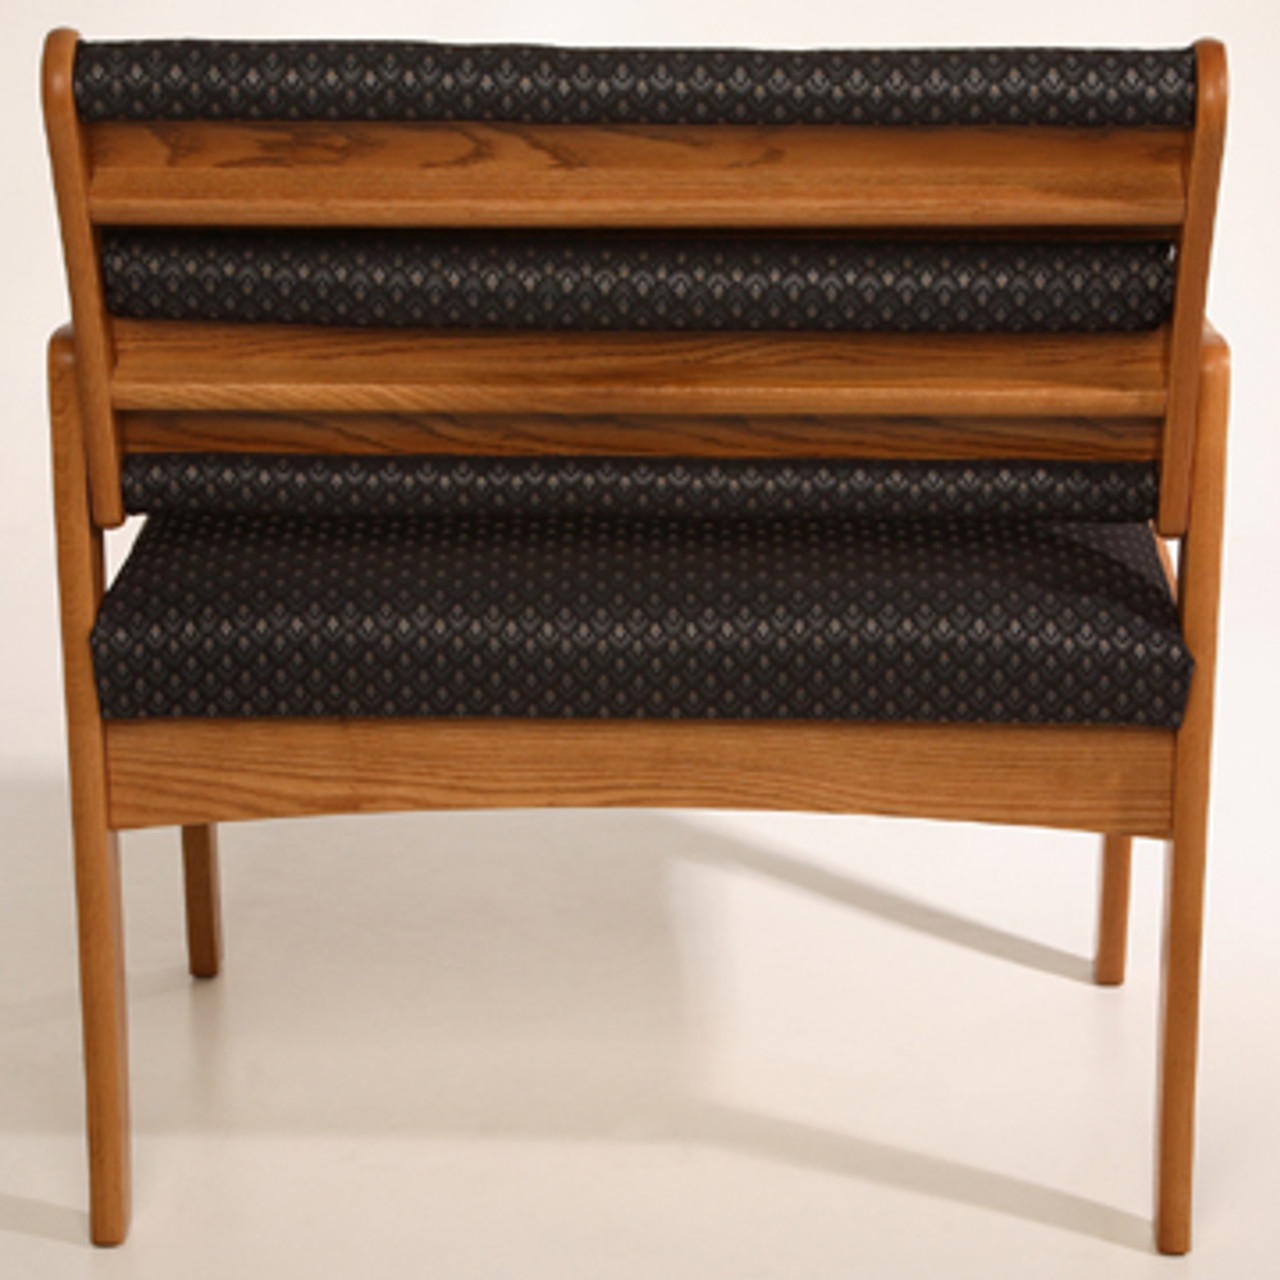 Wooden Mallet Valley Collection Bariatric Guest Chair, Standard Leg, Leaf Blue, Light Oak